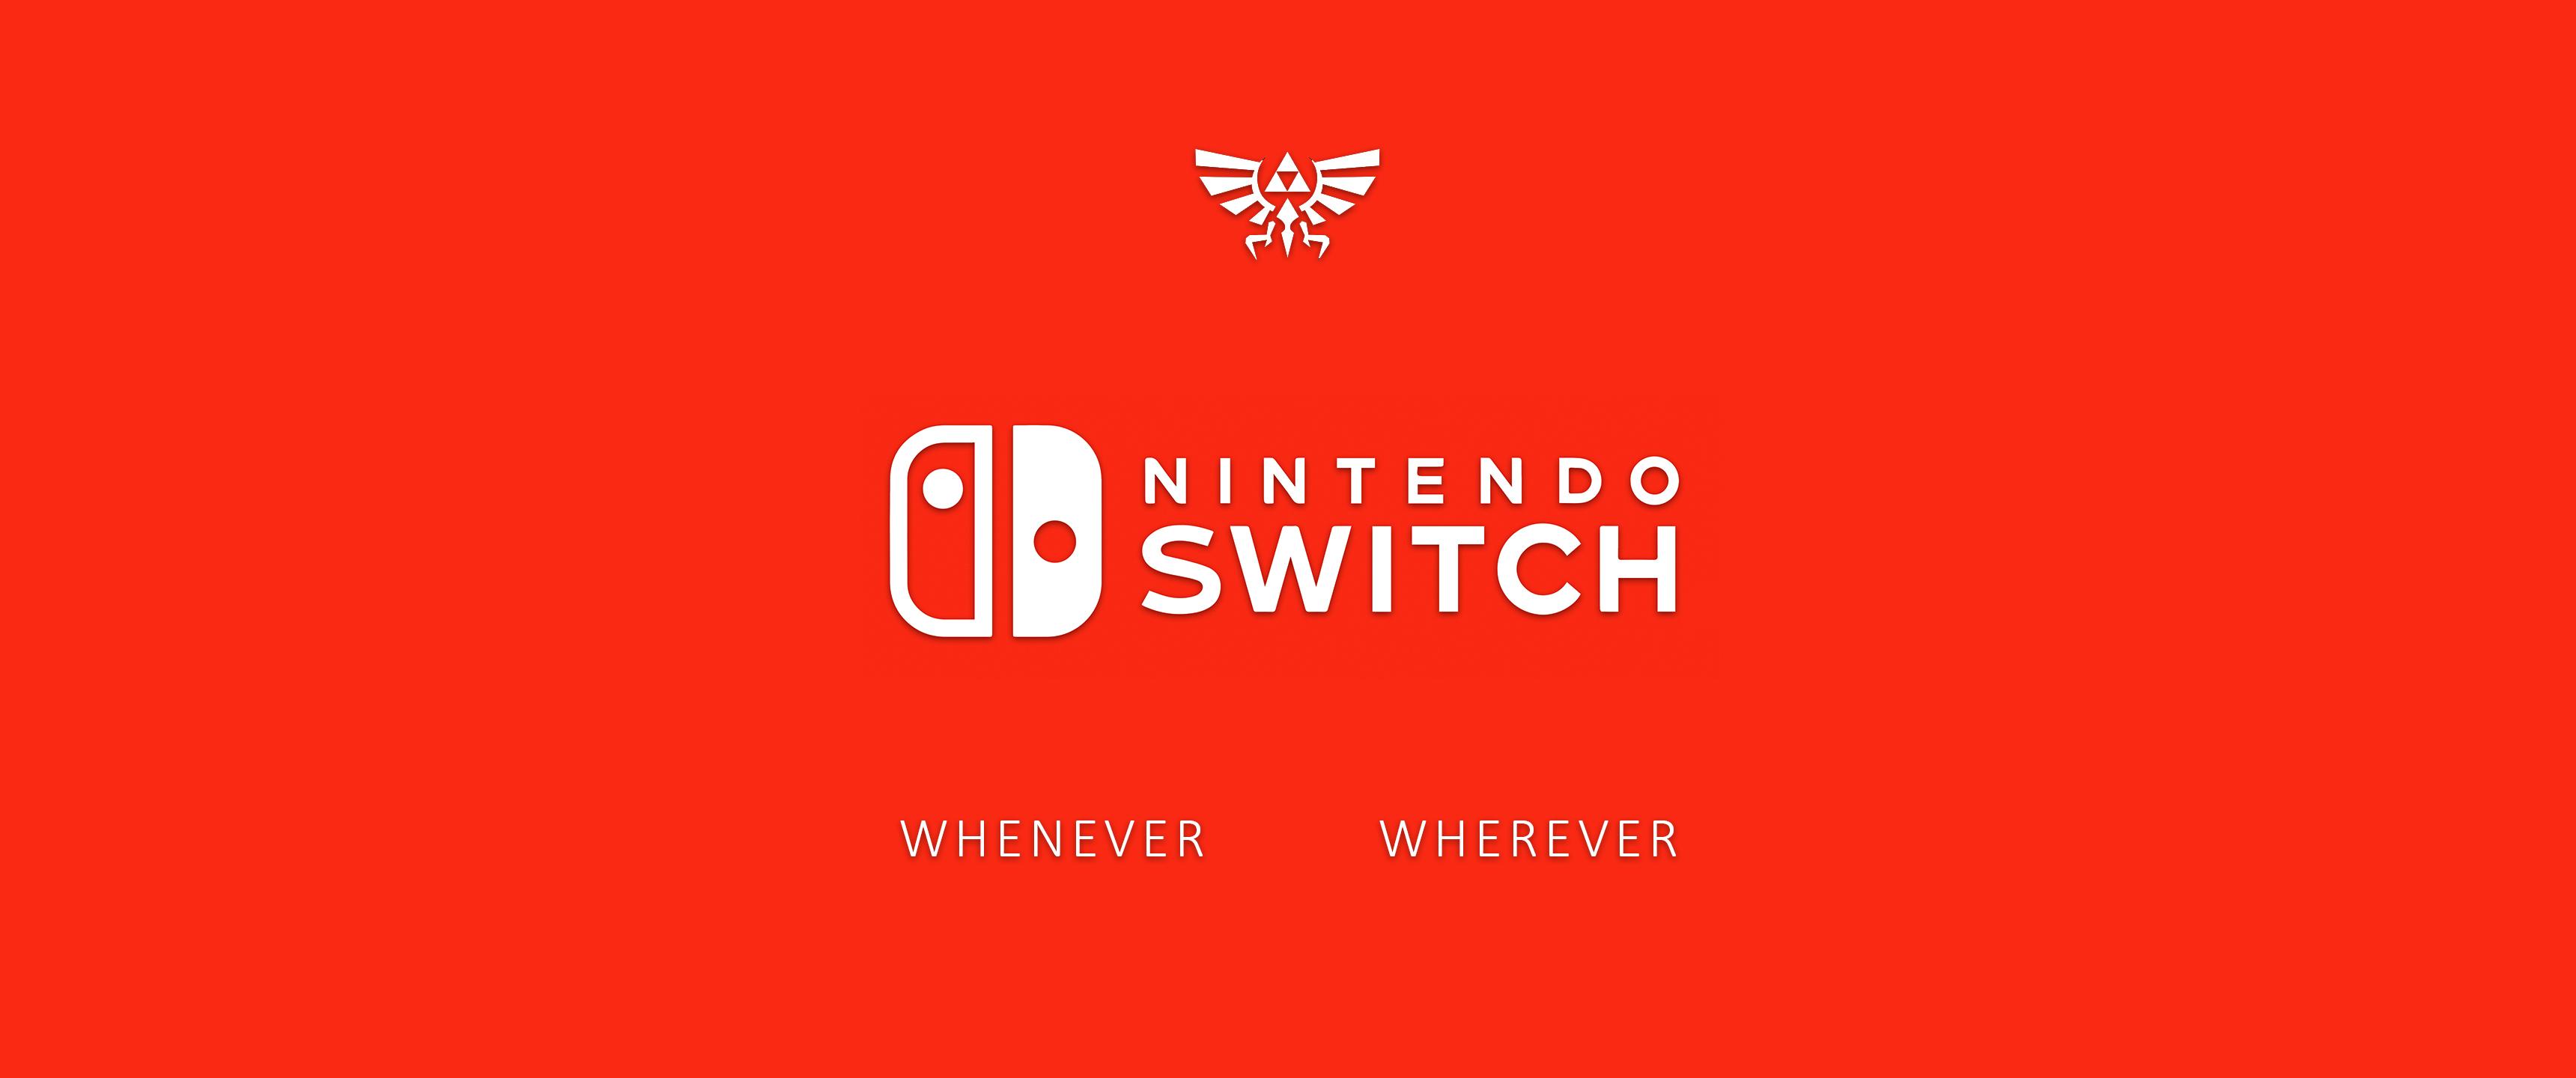 Nintendo Switch and Zelda Ultrawide Wallpaper (3440x1440)